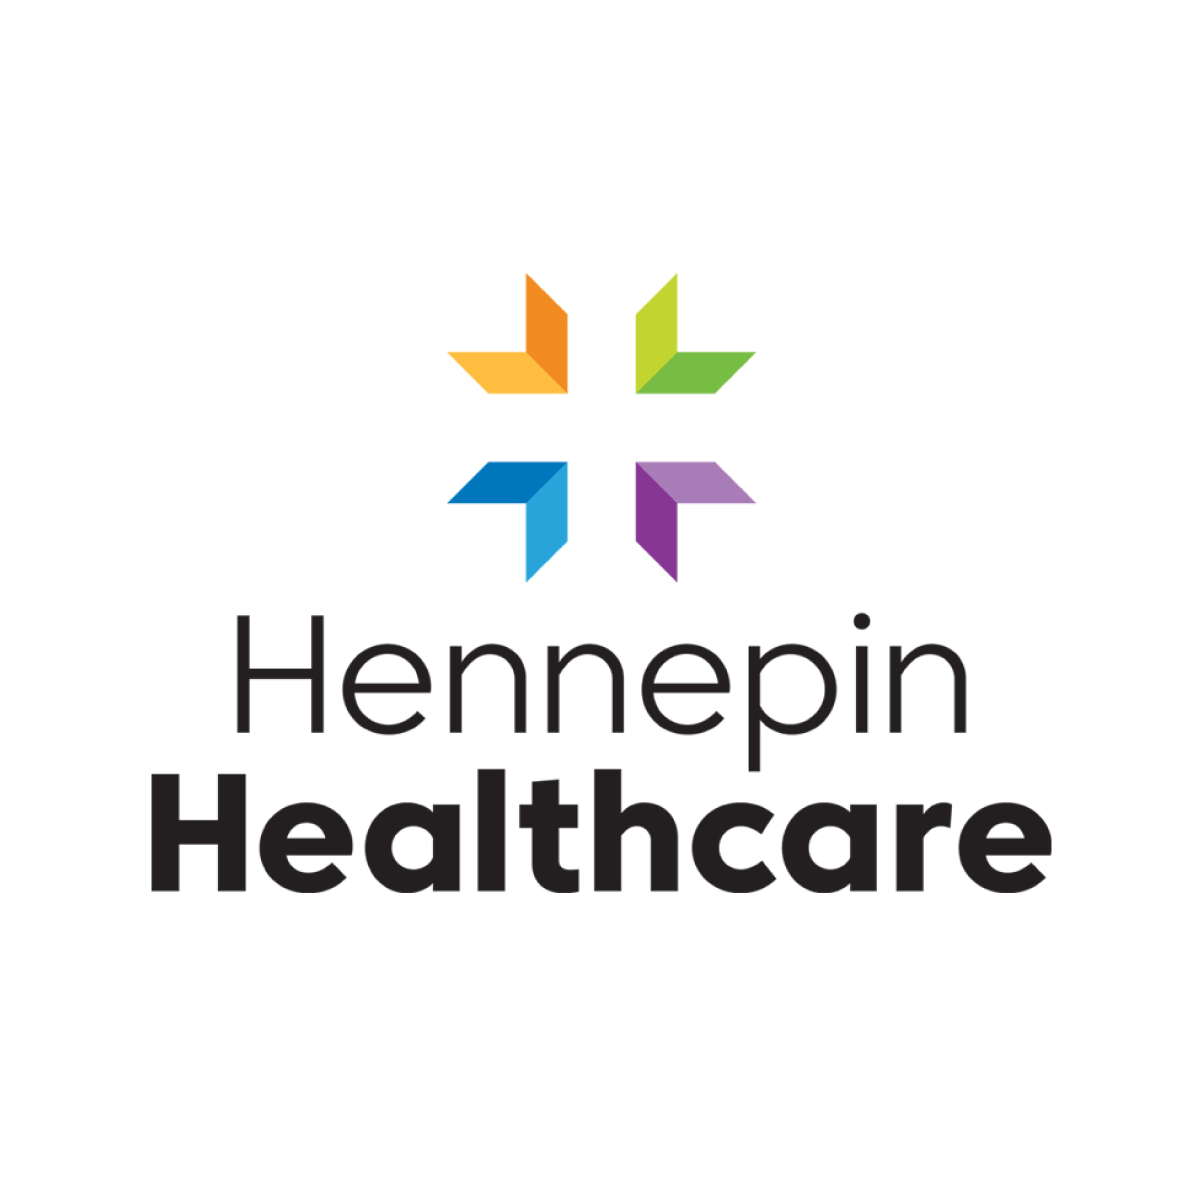 Hennepin Healthcare (HCMC)
hennepinhealthcare.org 